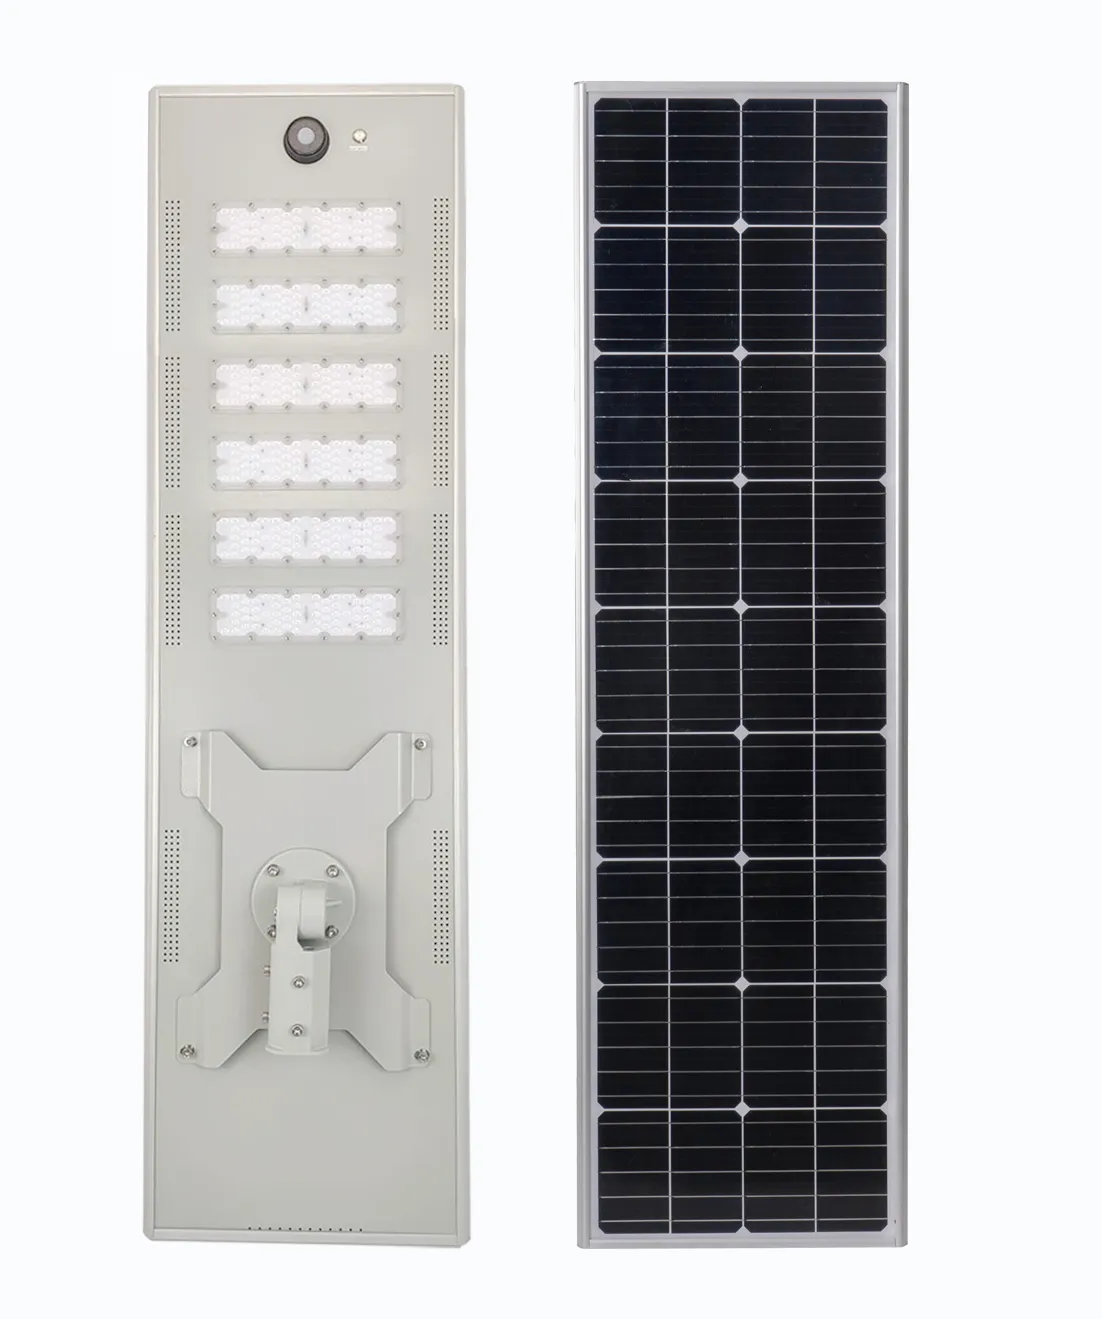 Aluminum alloy solar led street light street lamp 3030smd 30w 40w 50w 60w 80w 100w all in one for outdoor in smart cities